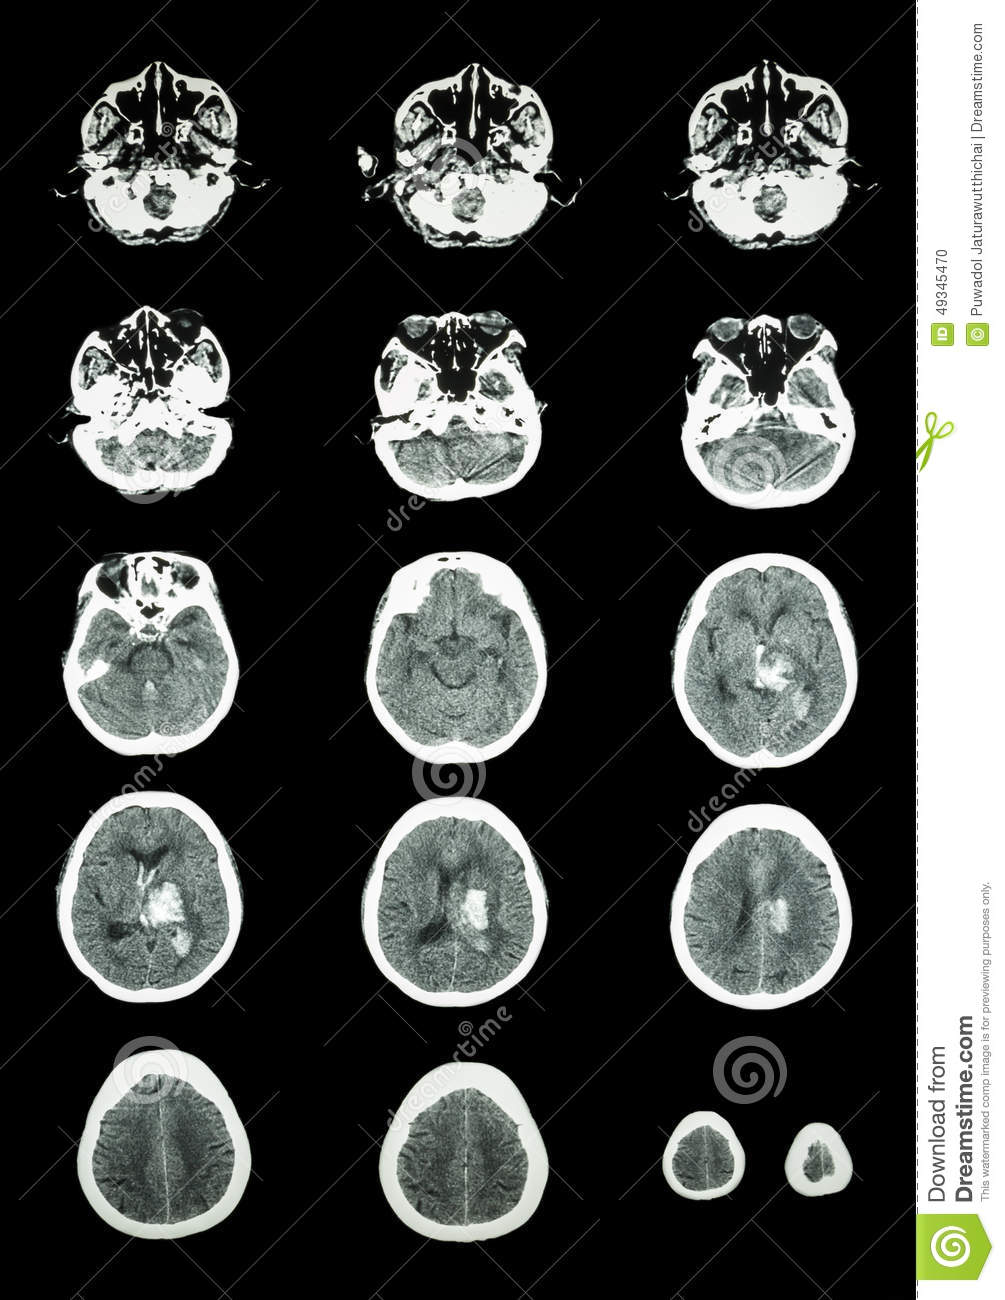 Hemorrhagic Stroke   Ct Scan  Computed Tomography  Of Brain   C